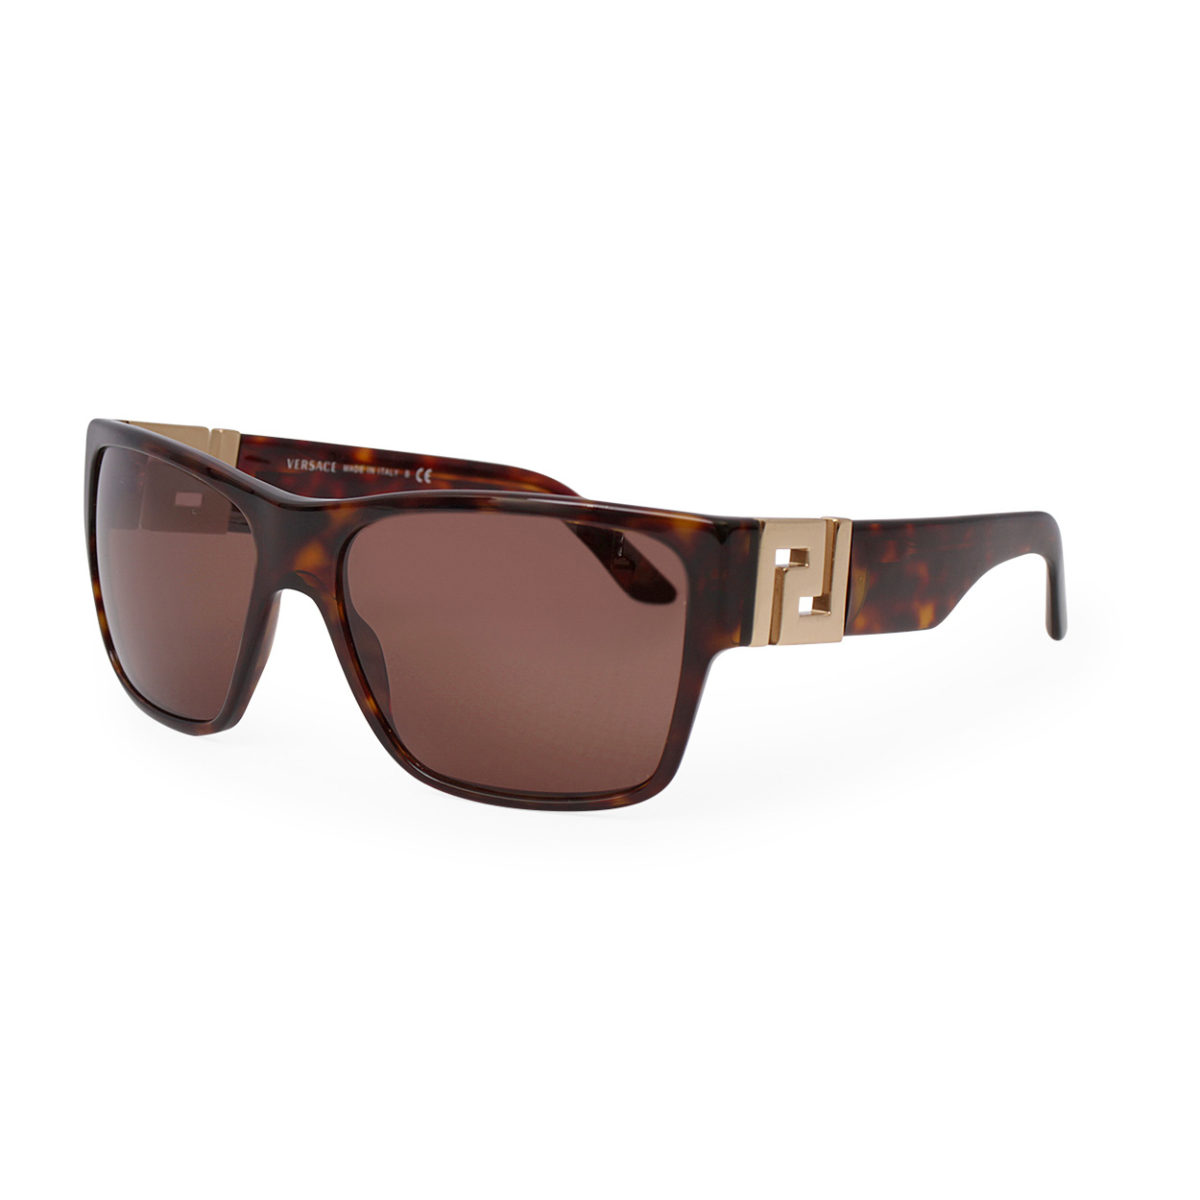 versace 4296 sunglasses